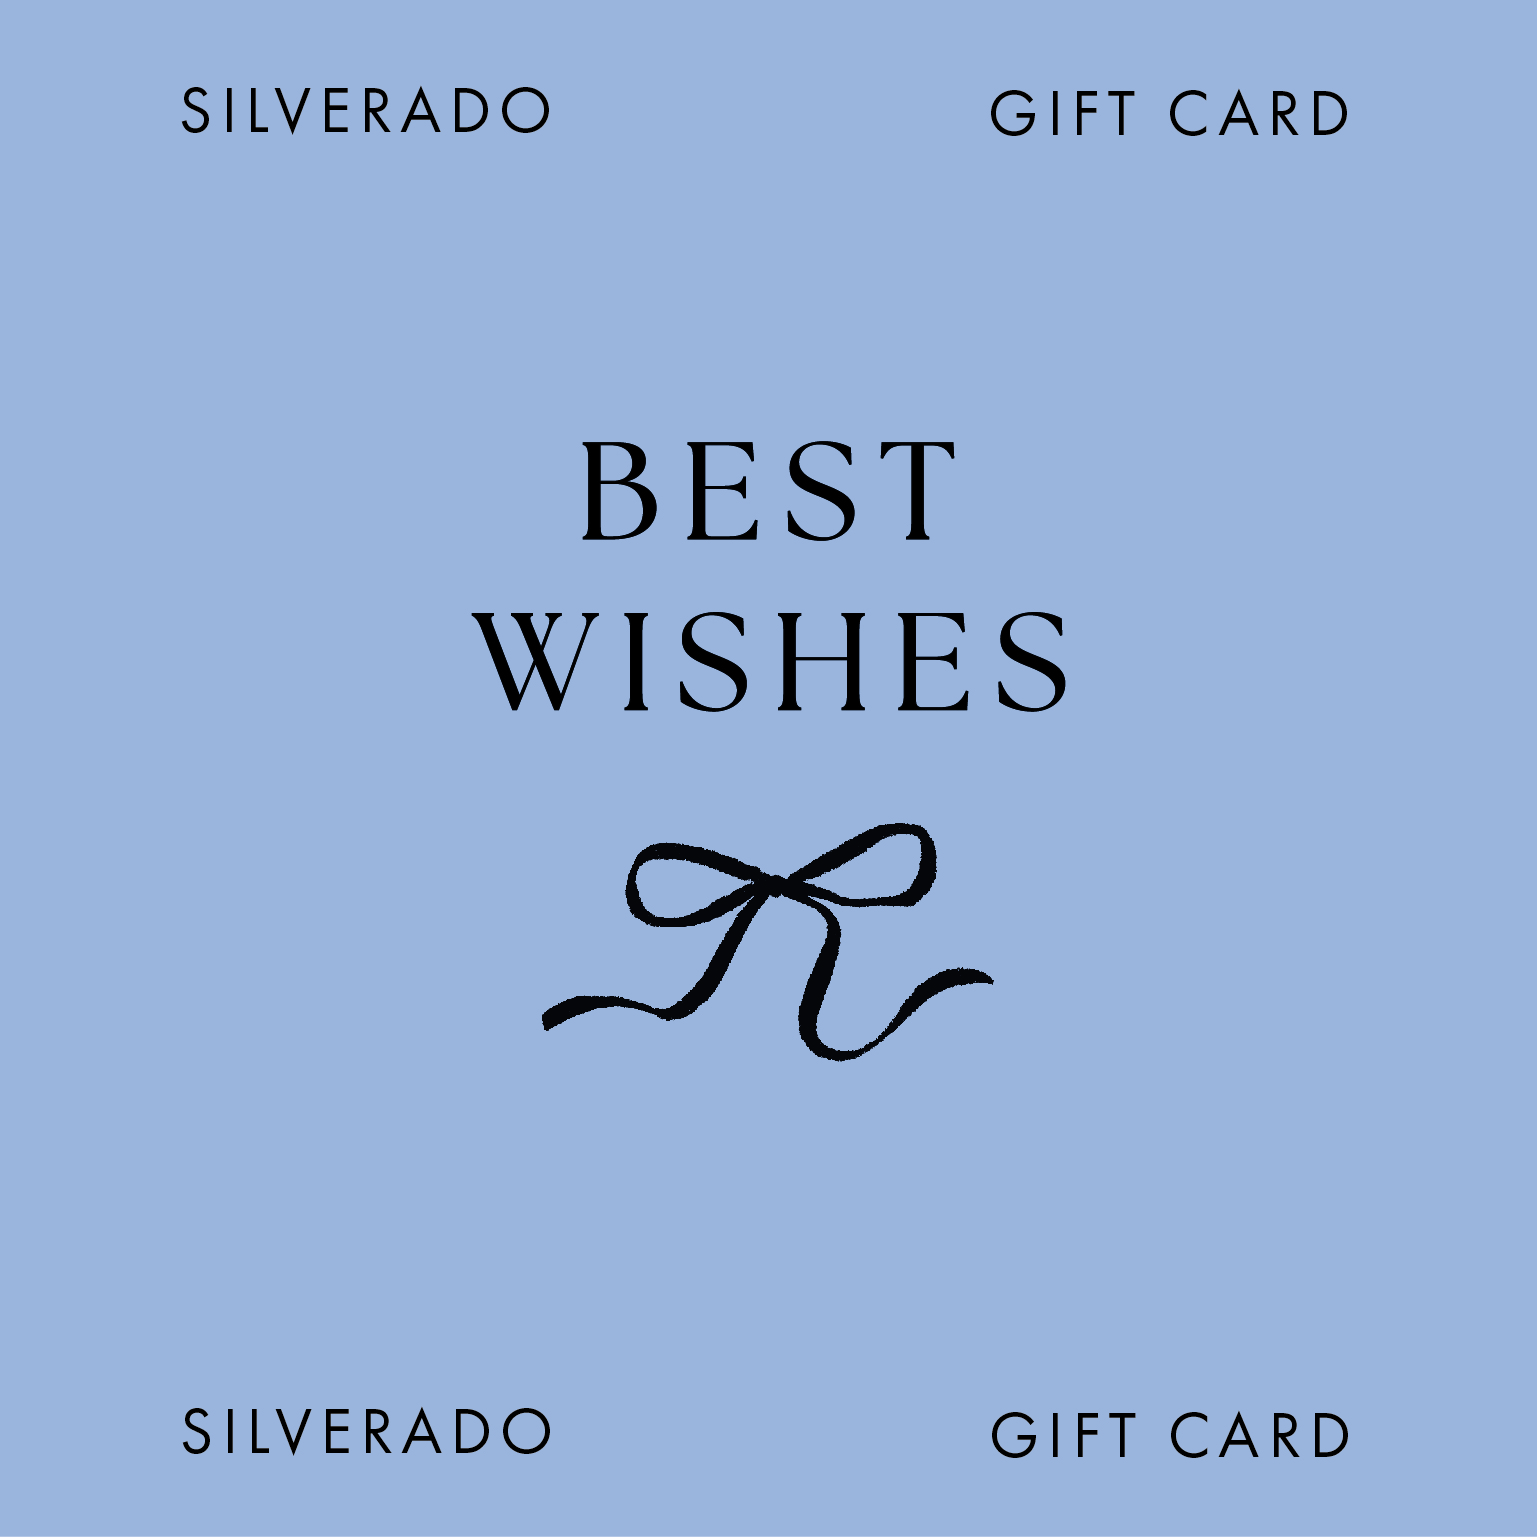 Best Wishes Gift Card - Silverado Jewellery